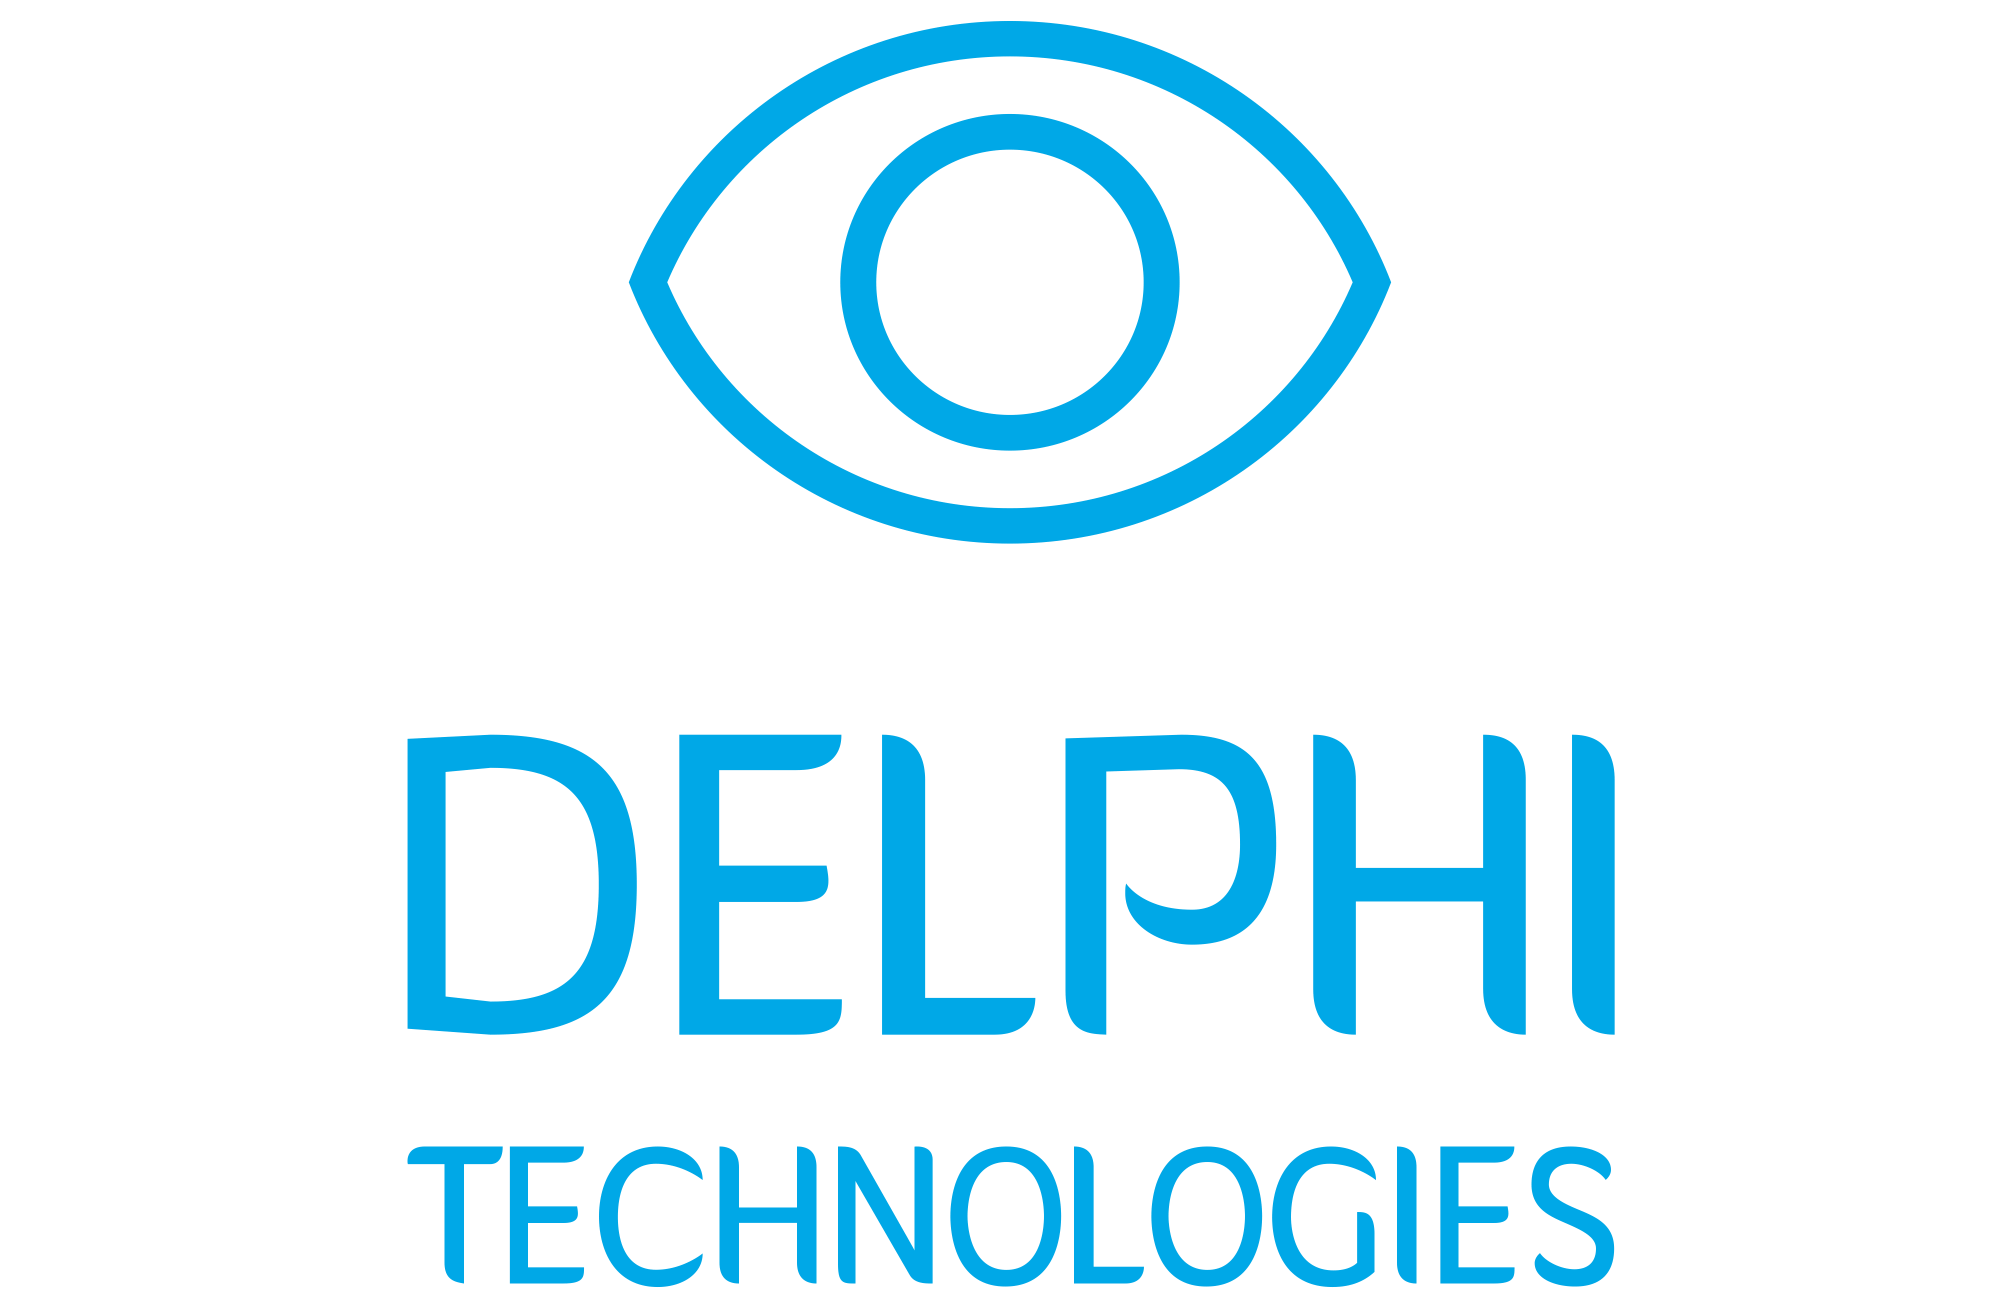 Delphi Technologies Logo - Delphi Technologies - MAXQDA - The Art of Data Analysis - MAXQDA ...